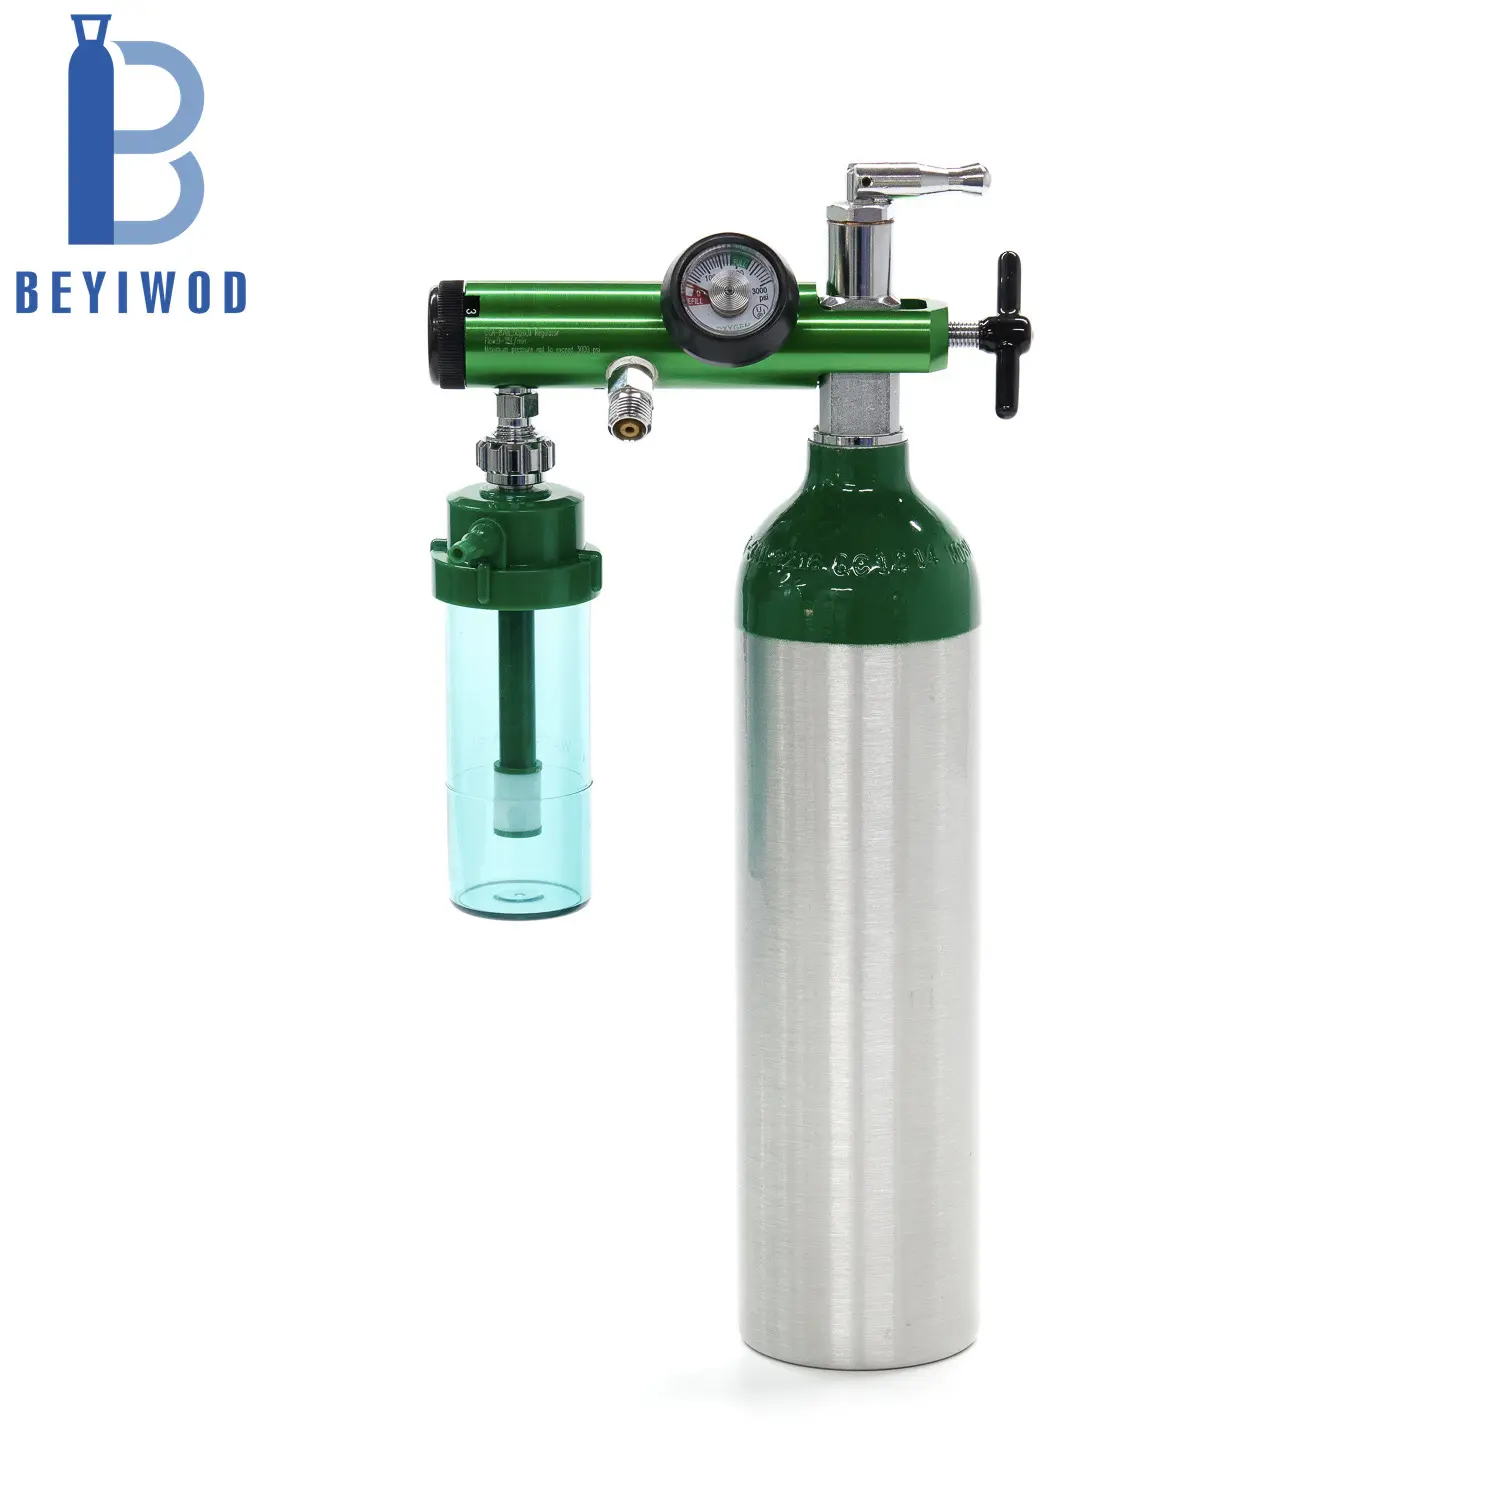 DOT-3AL Portable MD Size Medical Oxygen Aluminum Cylinder O2 bottle for RPE breathing apparatus